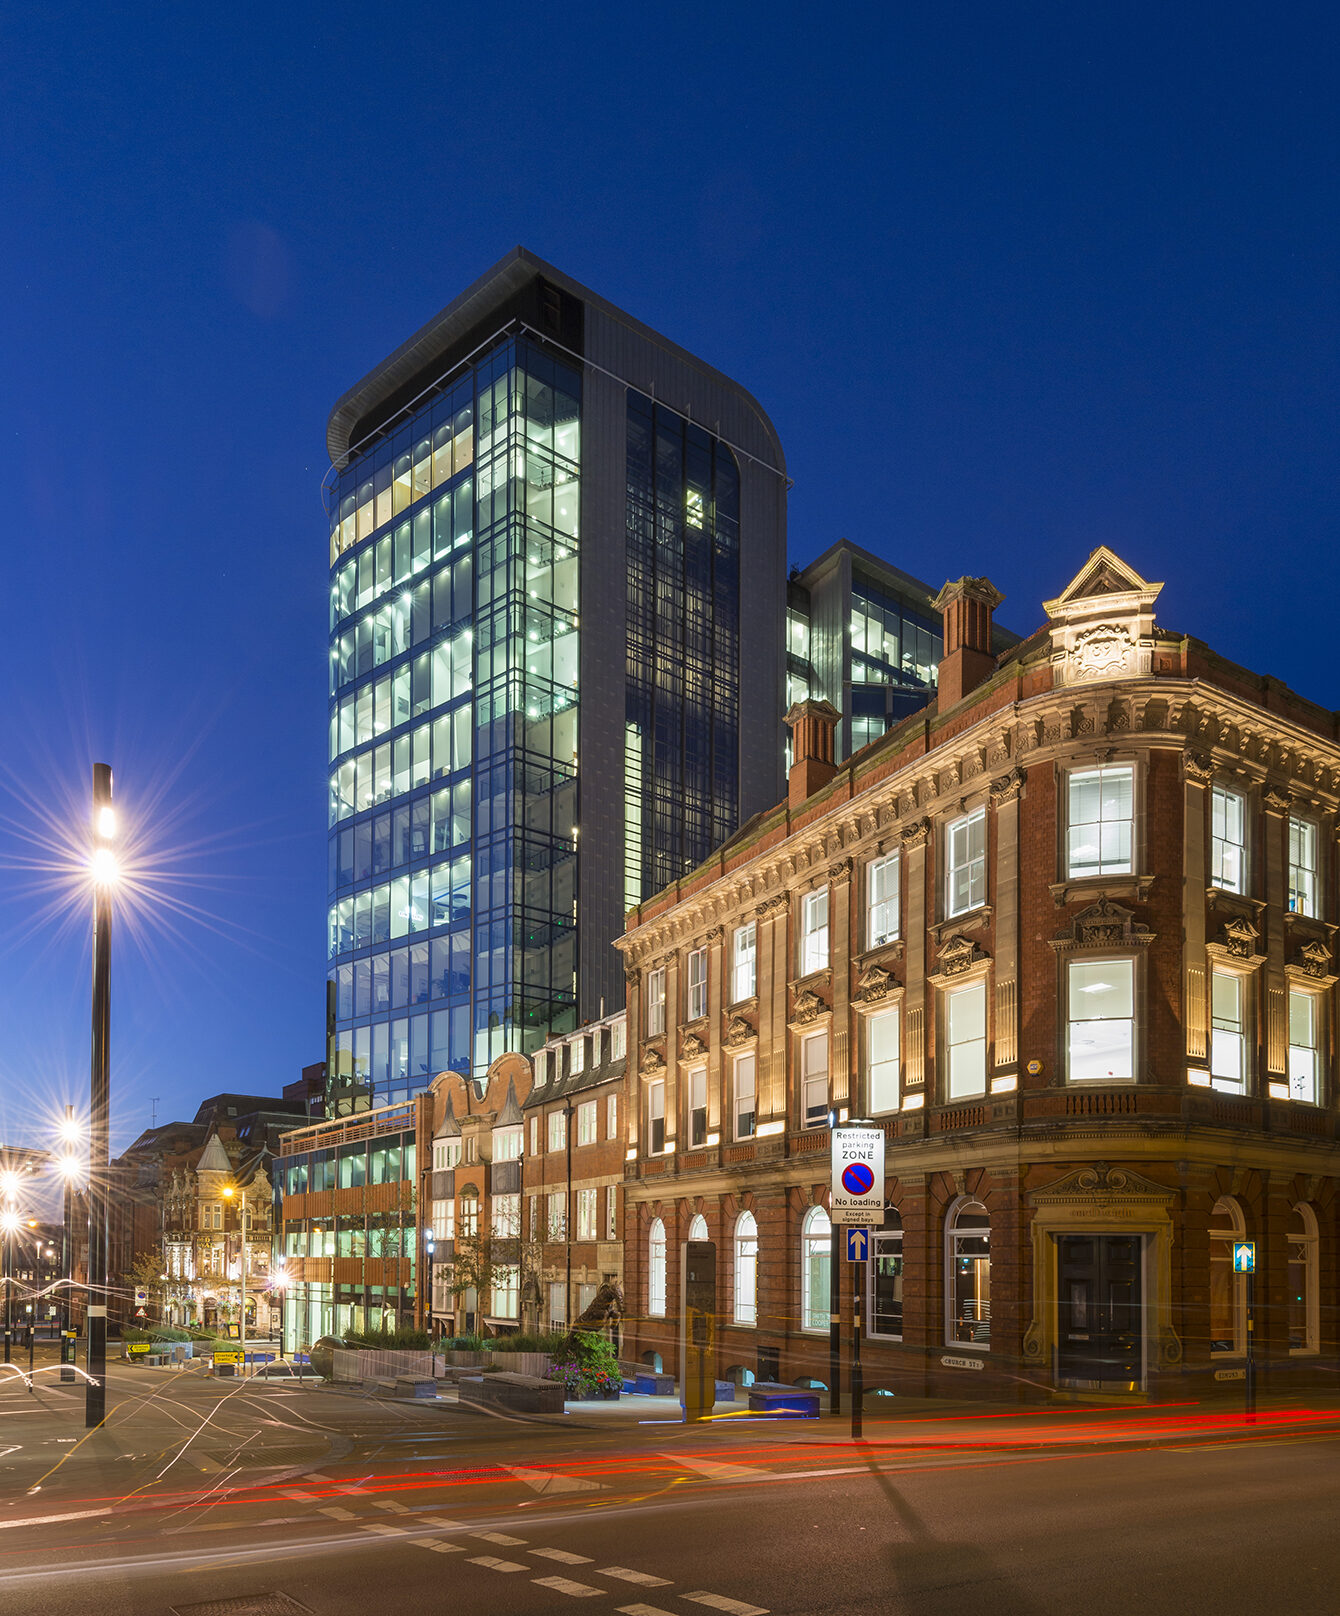 45 Church Street offices in Birmingham City Centre, England